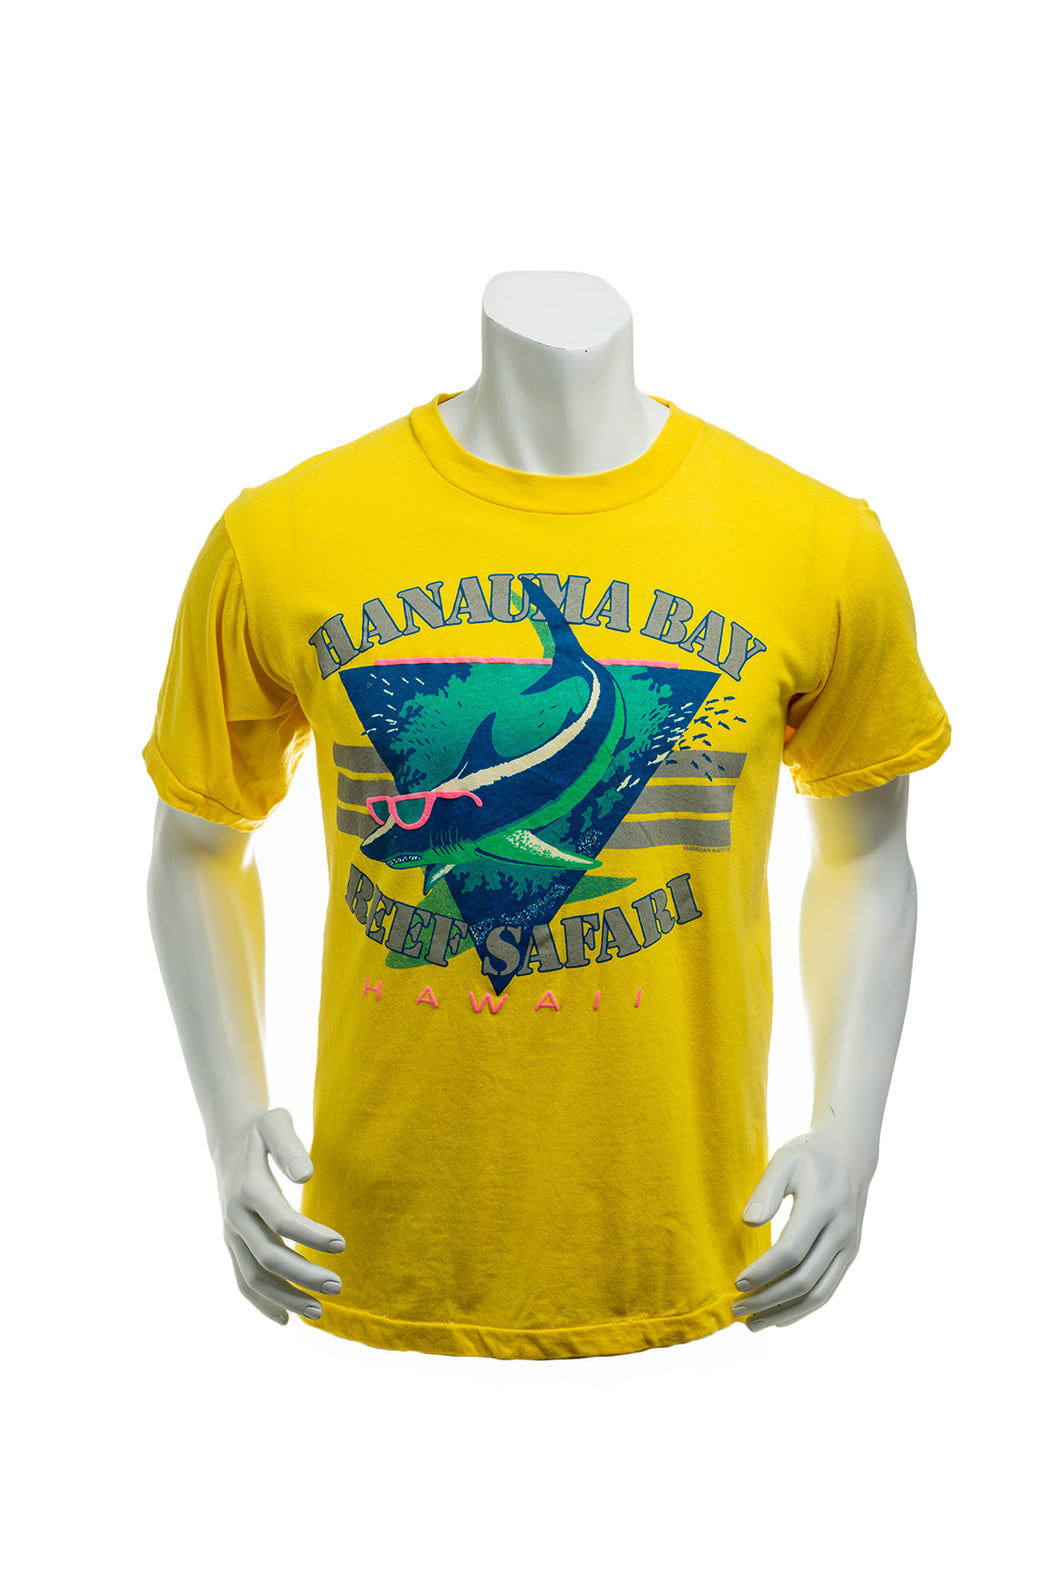 Vintage 1987 Hanauma Bay Reef Safari Hawaii Single Stitch T-Shirt Men's Medium